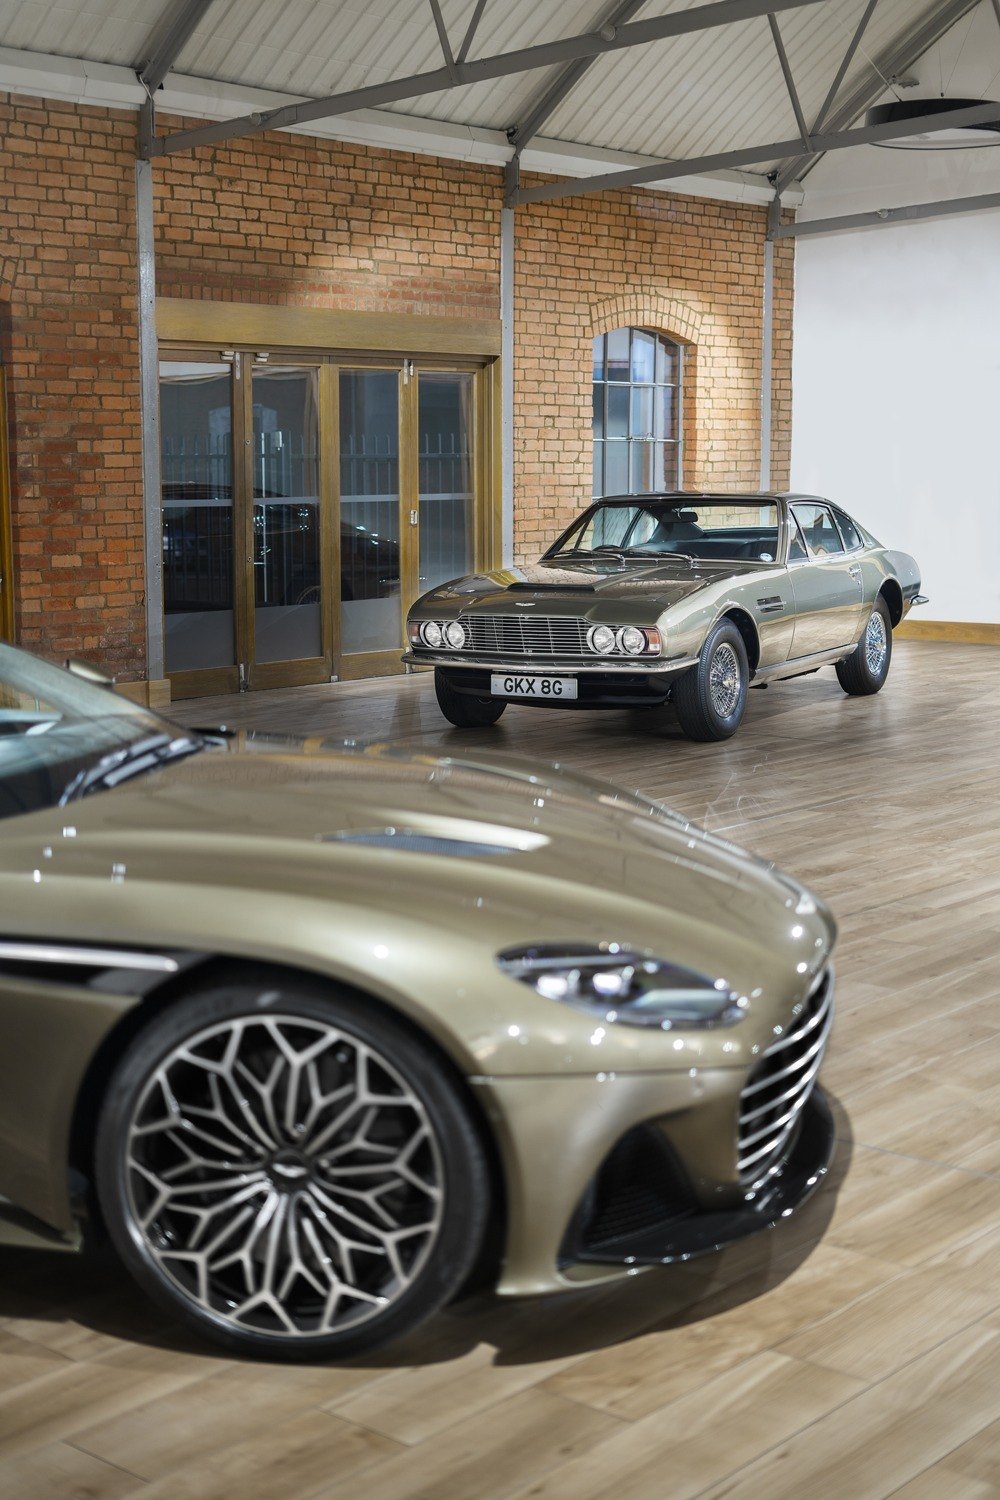 imagen 3 de El nuevo Aston Martin de Bond, James Bond.